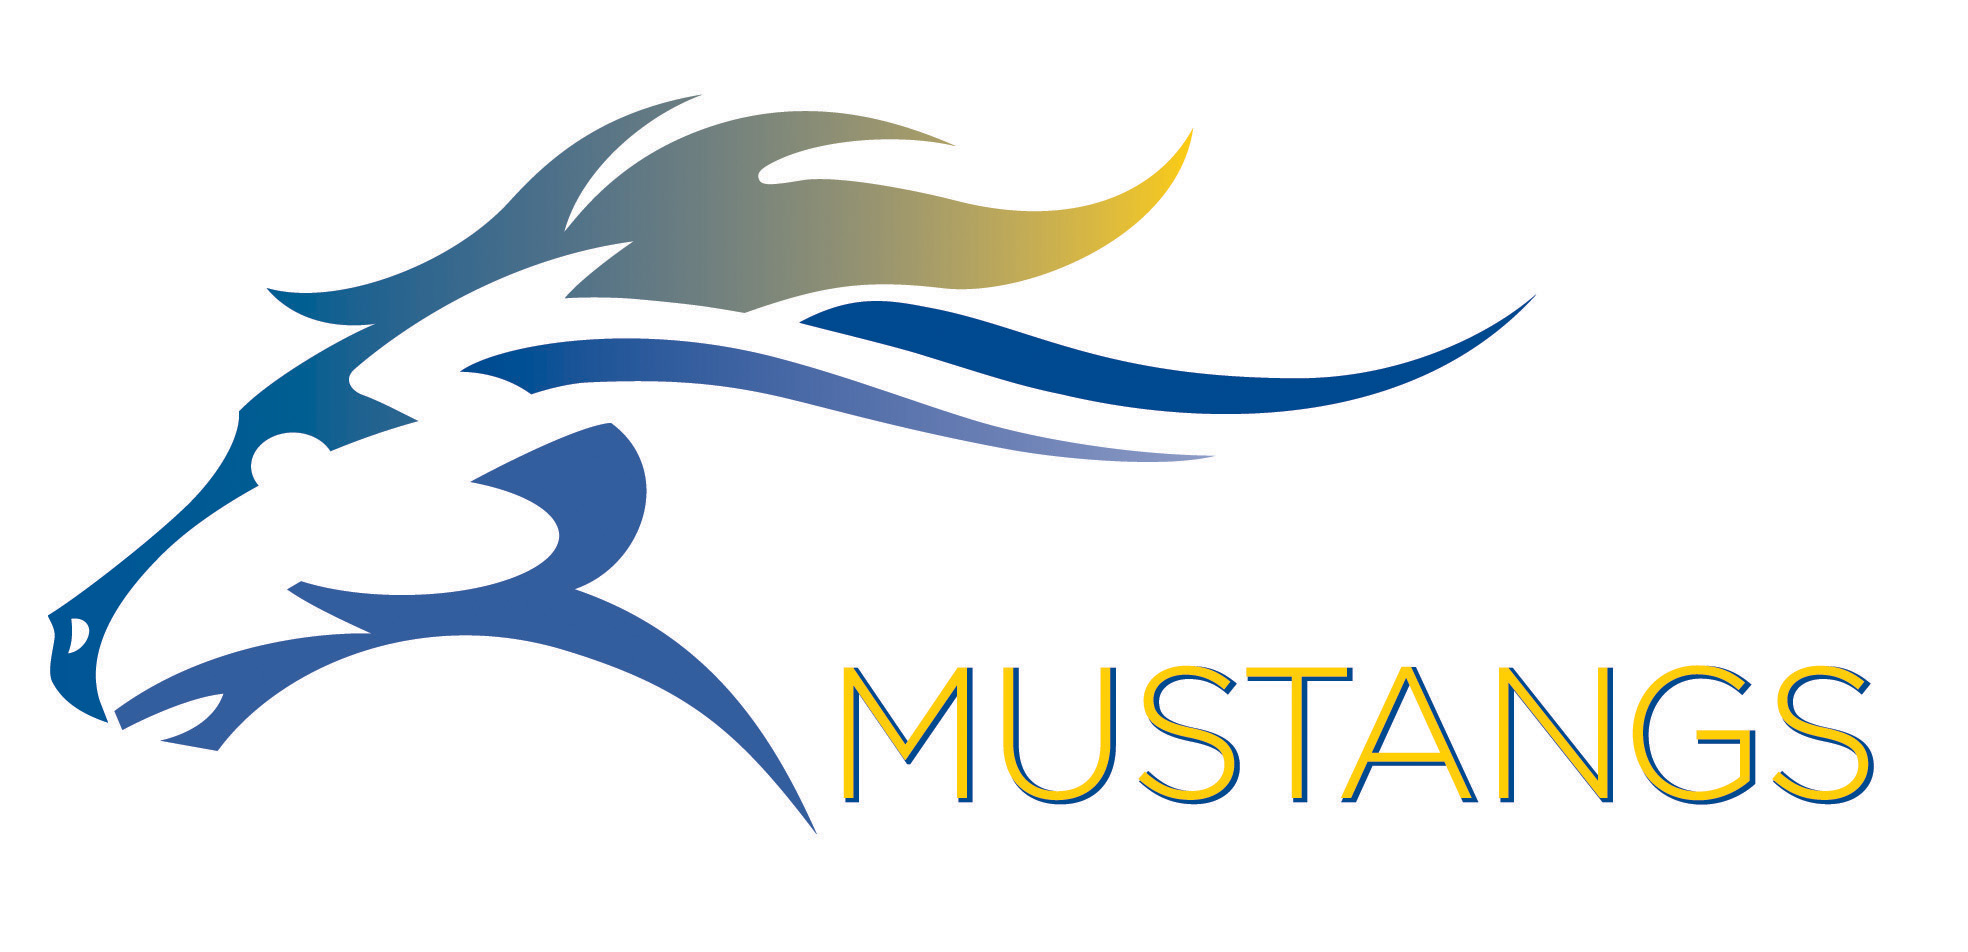 Free Mustang Mascot Cliparts, Download Free Mustang Mascot Cliparts png